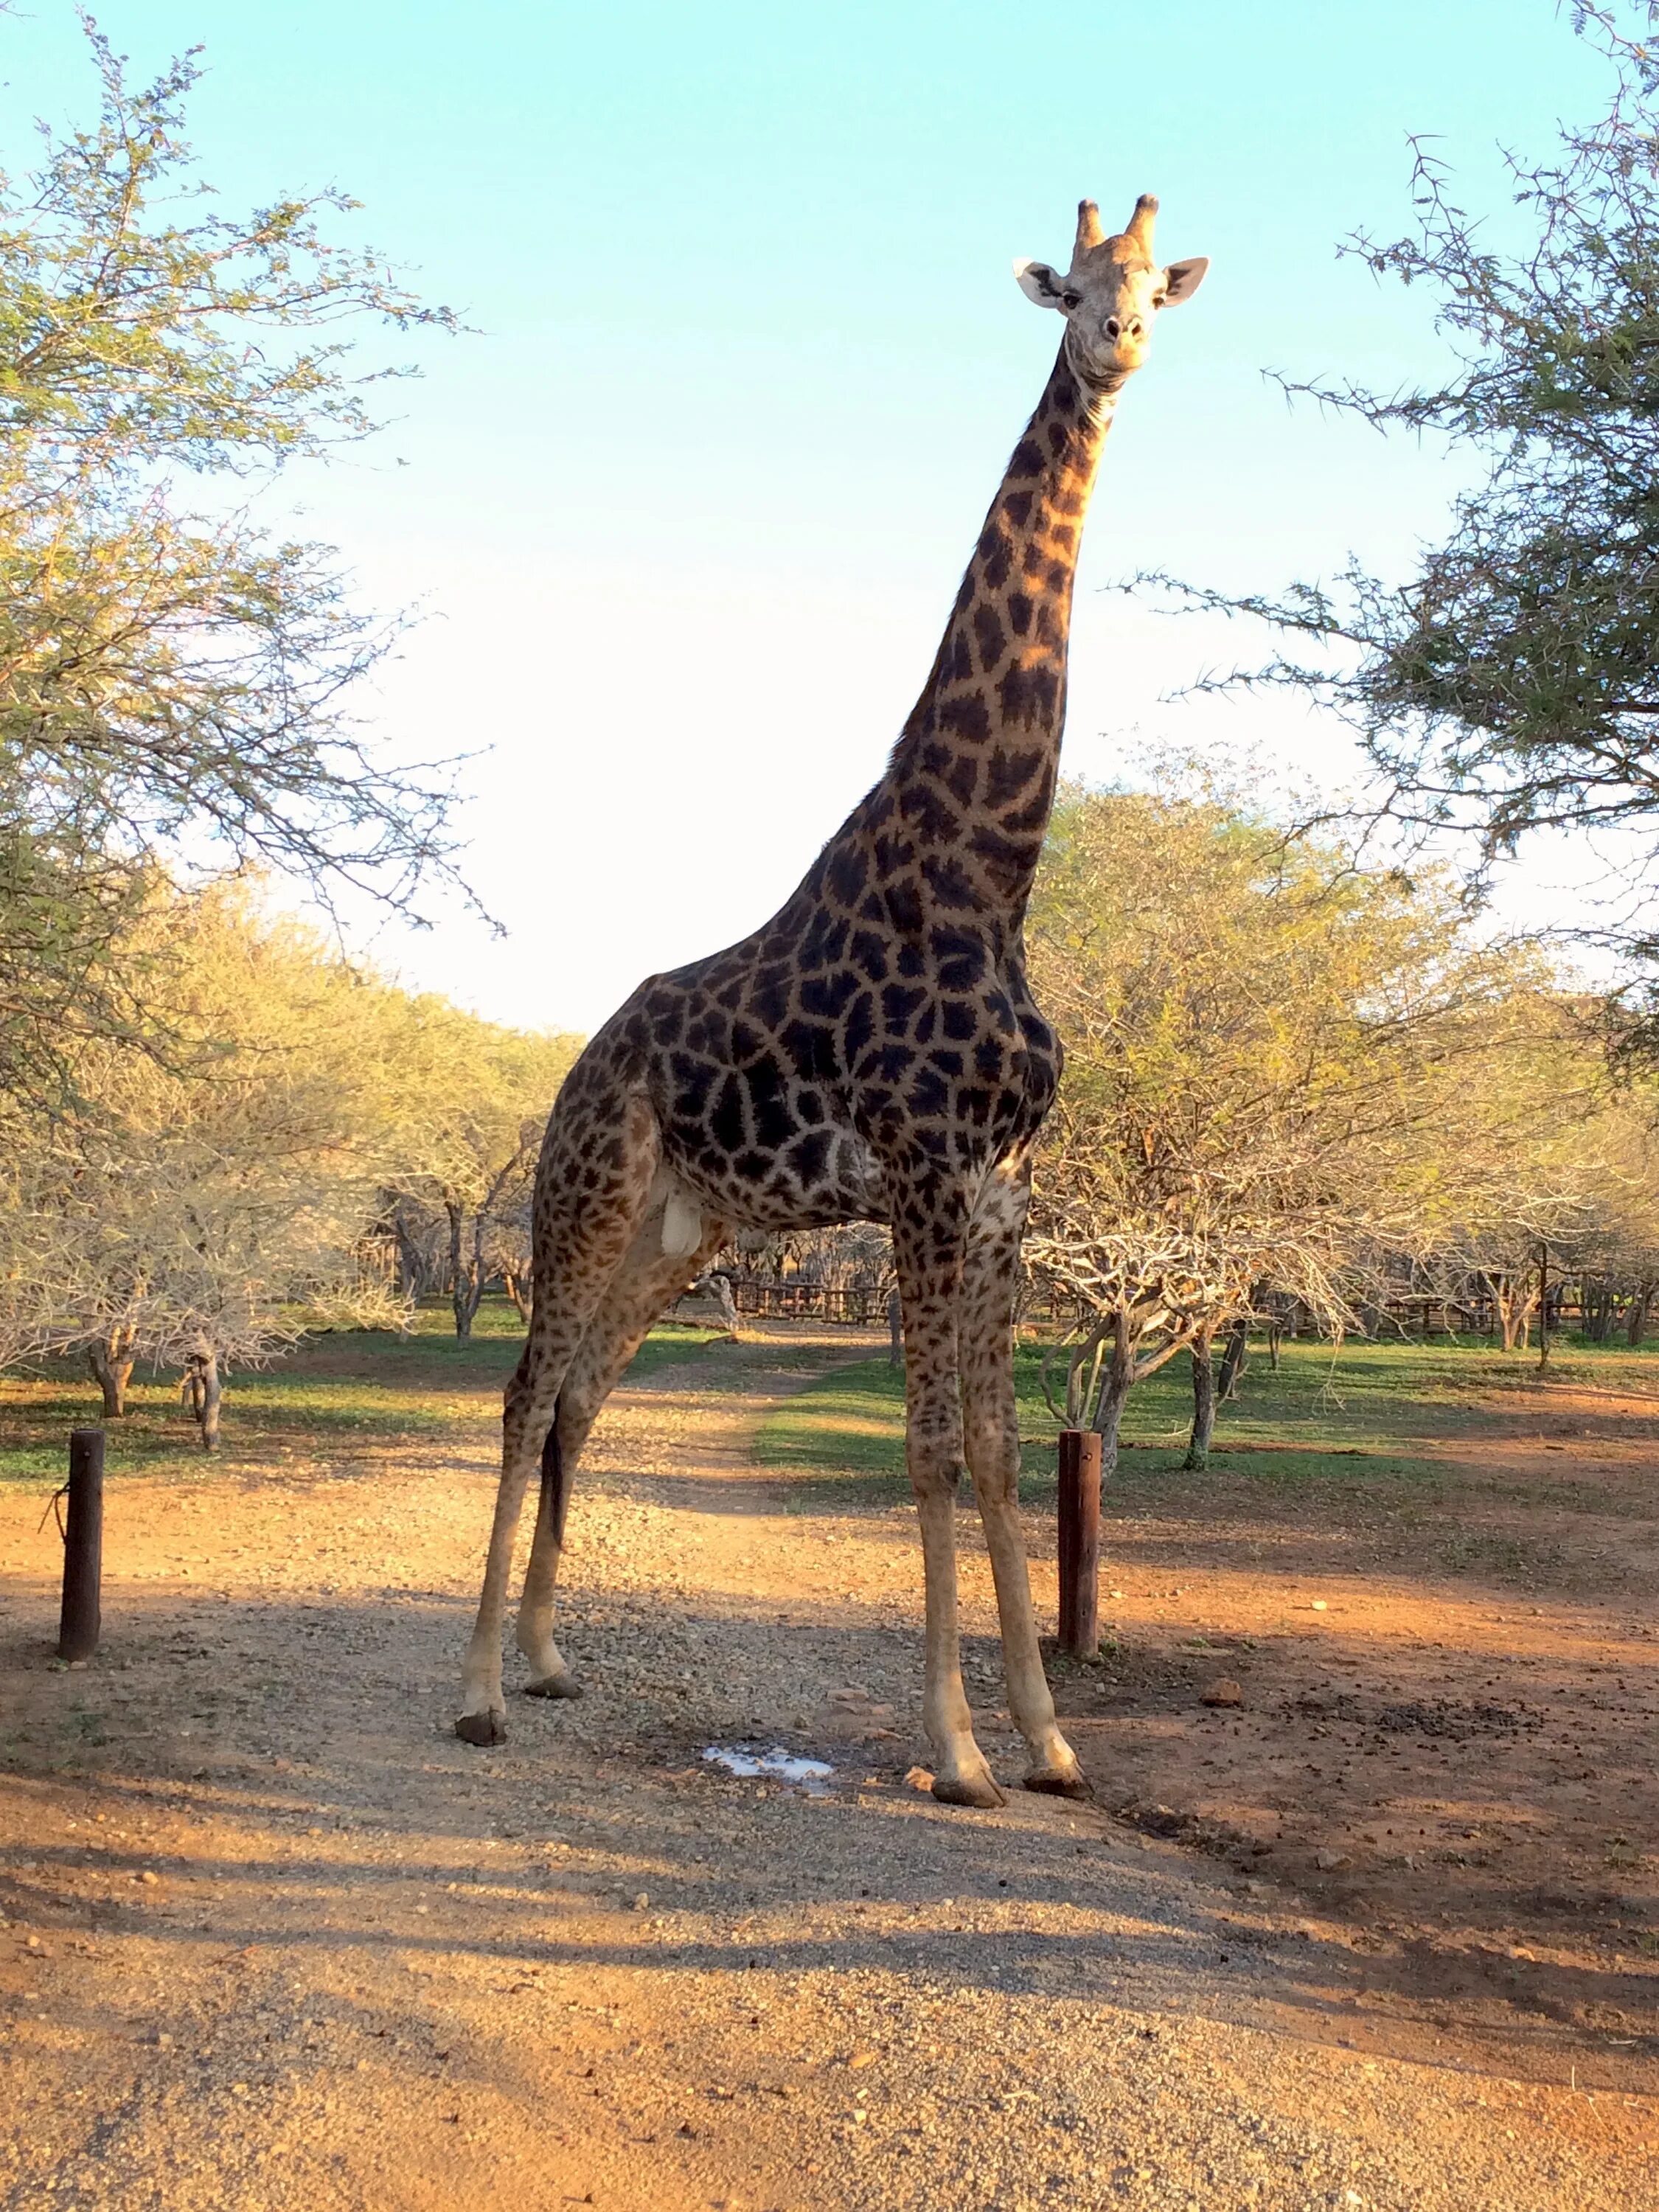 Жираф саванны Африки. Африка Саванна Жирафы. Западноафриканский Жираф. Зоопарк в Африке. Жираф африканское животное